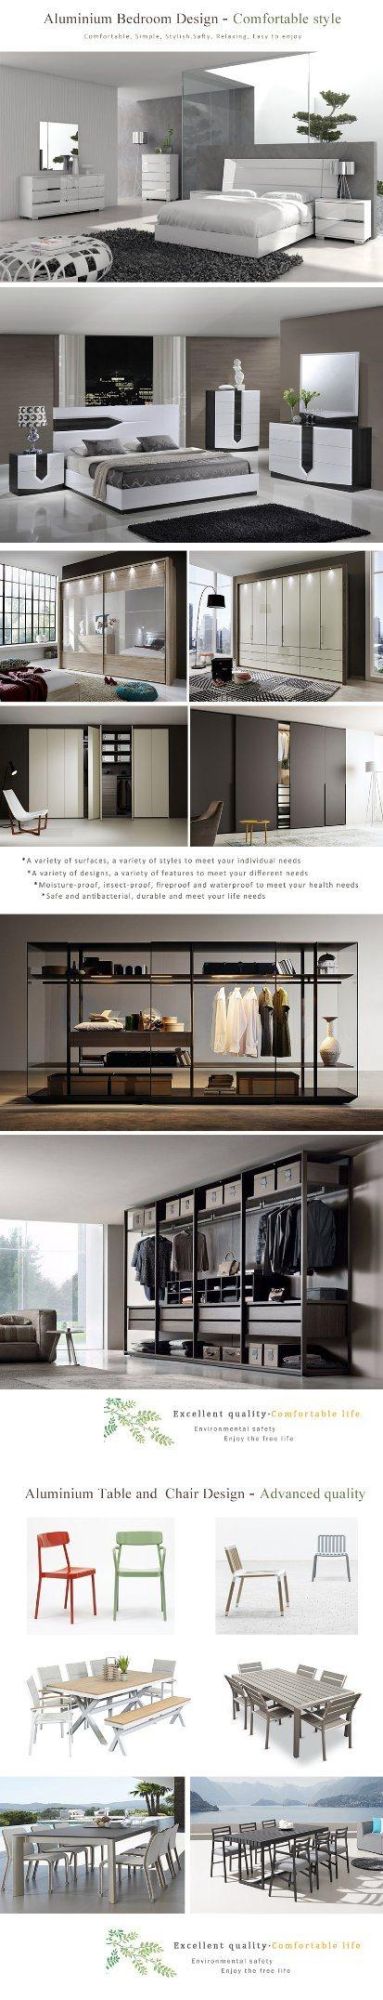 Home Furniture for Aluminum Bathtub Cabinet